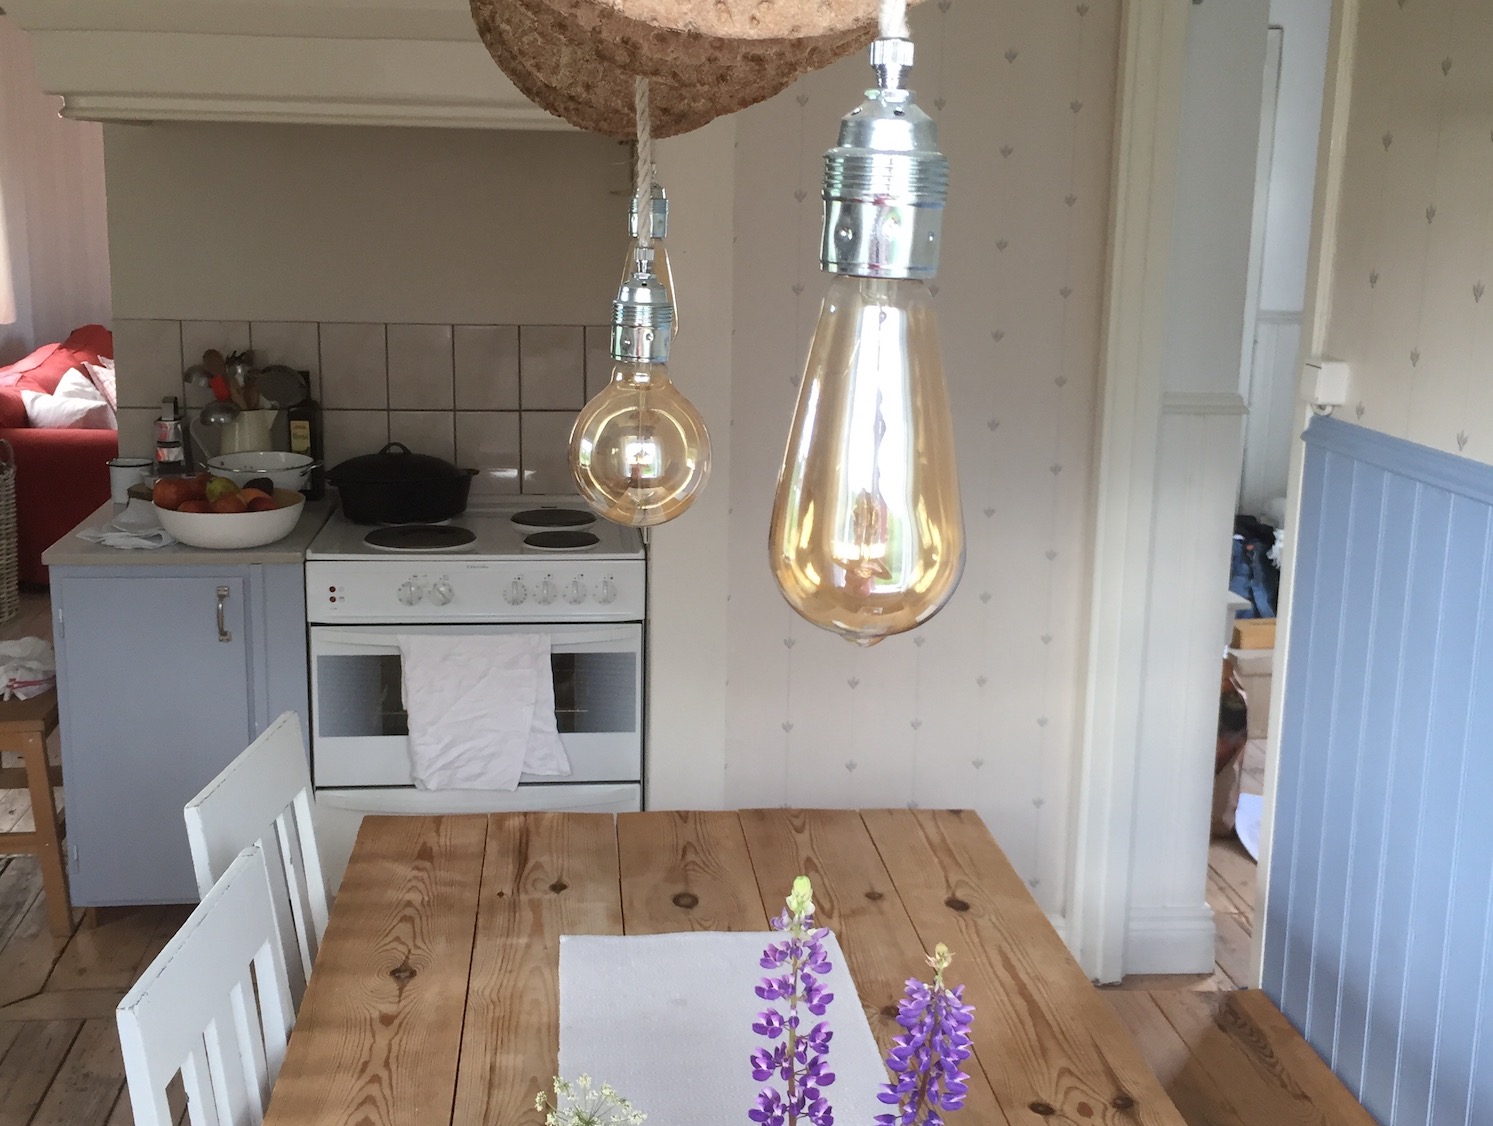 NordicLife interior - kitchen